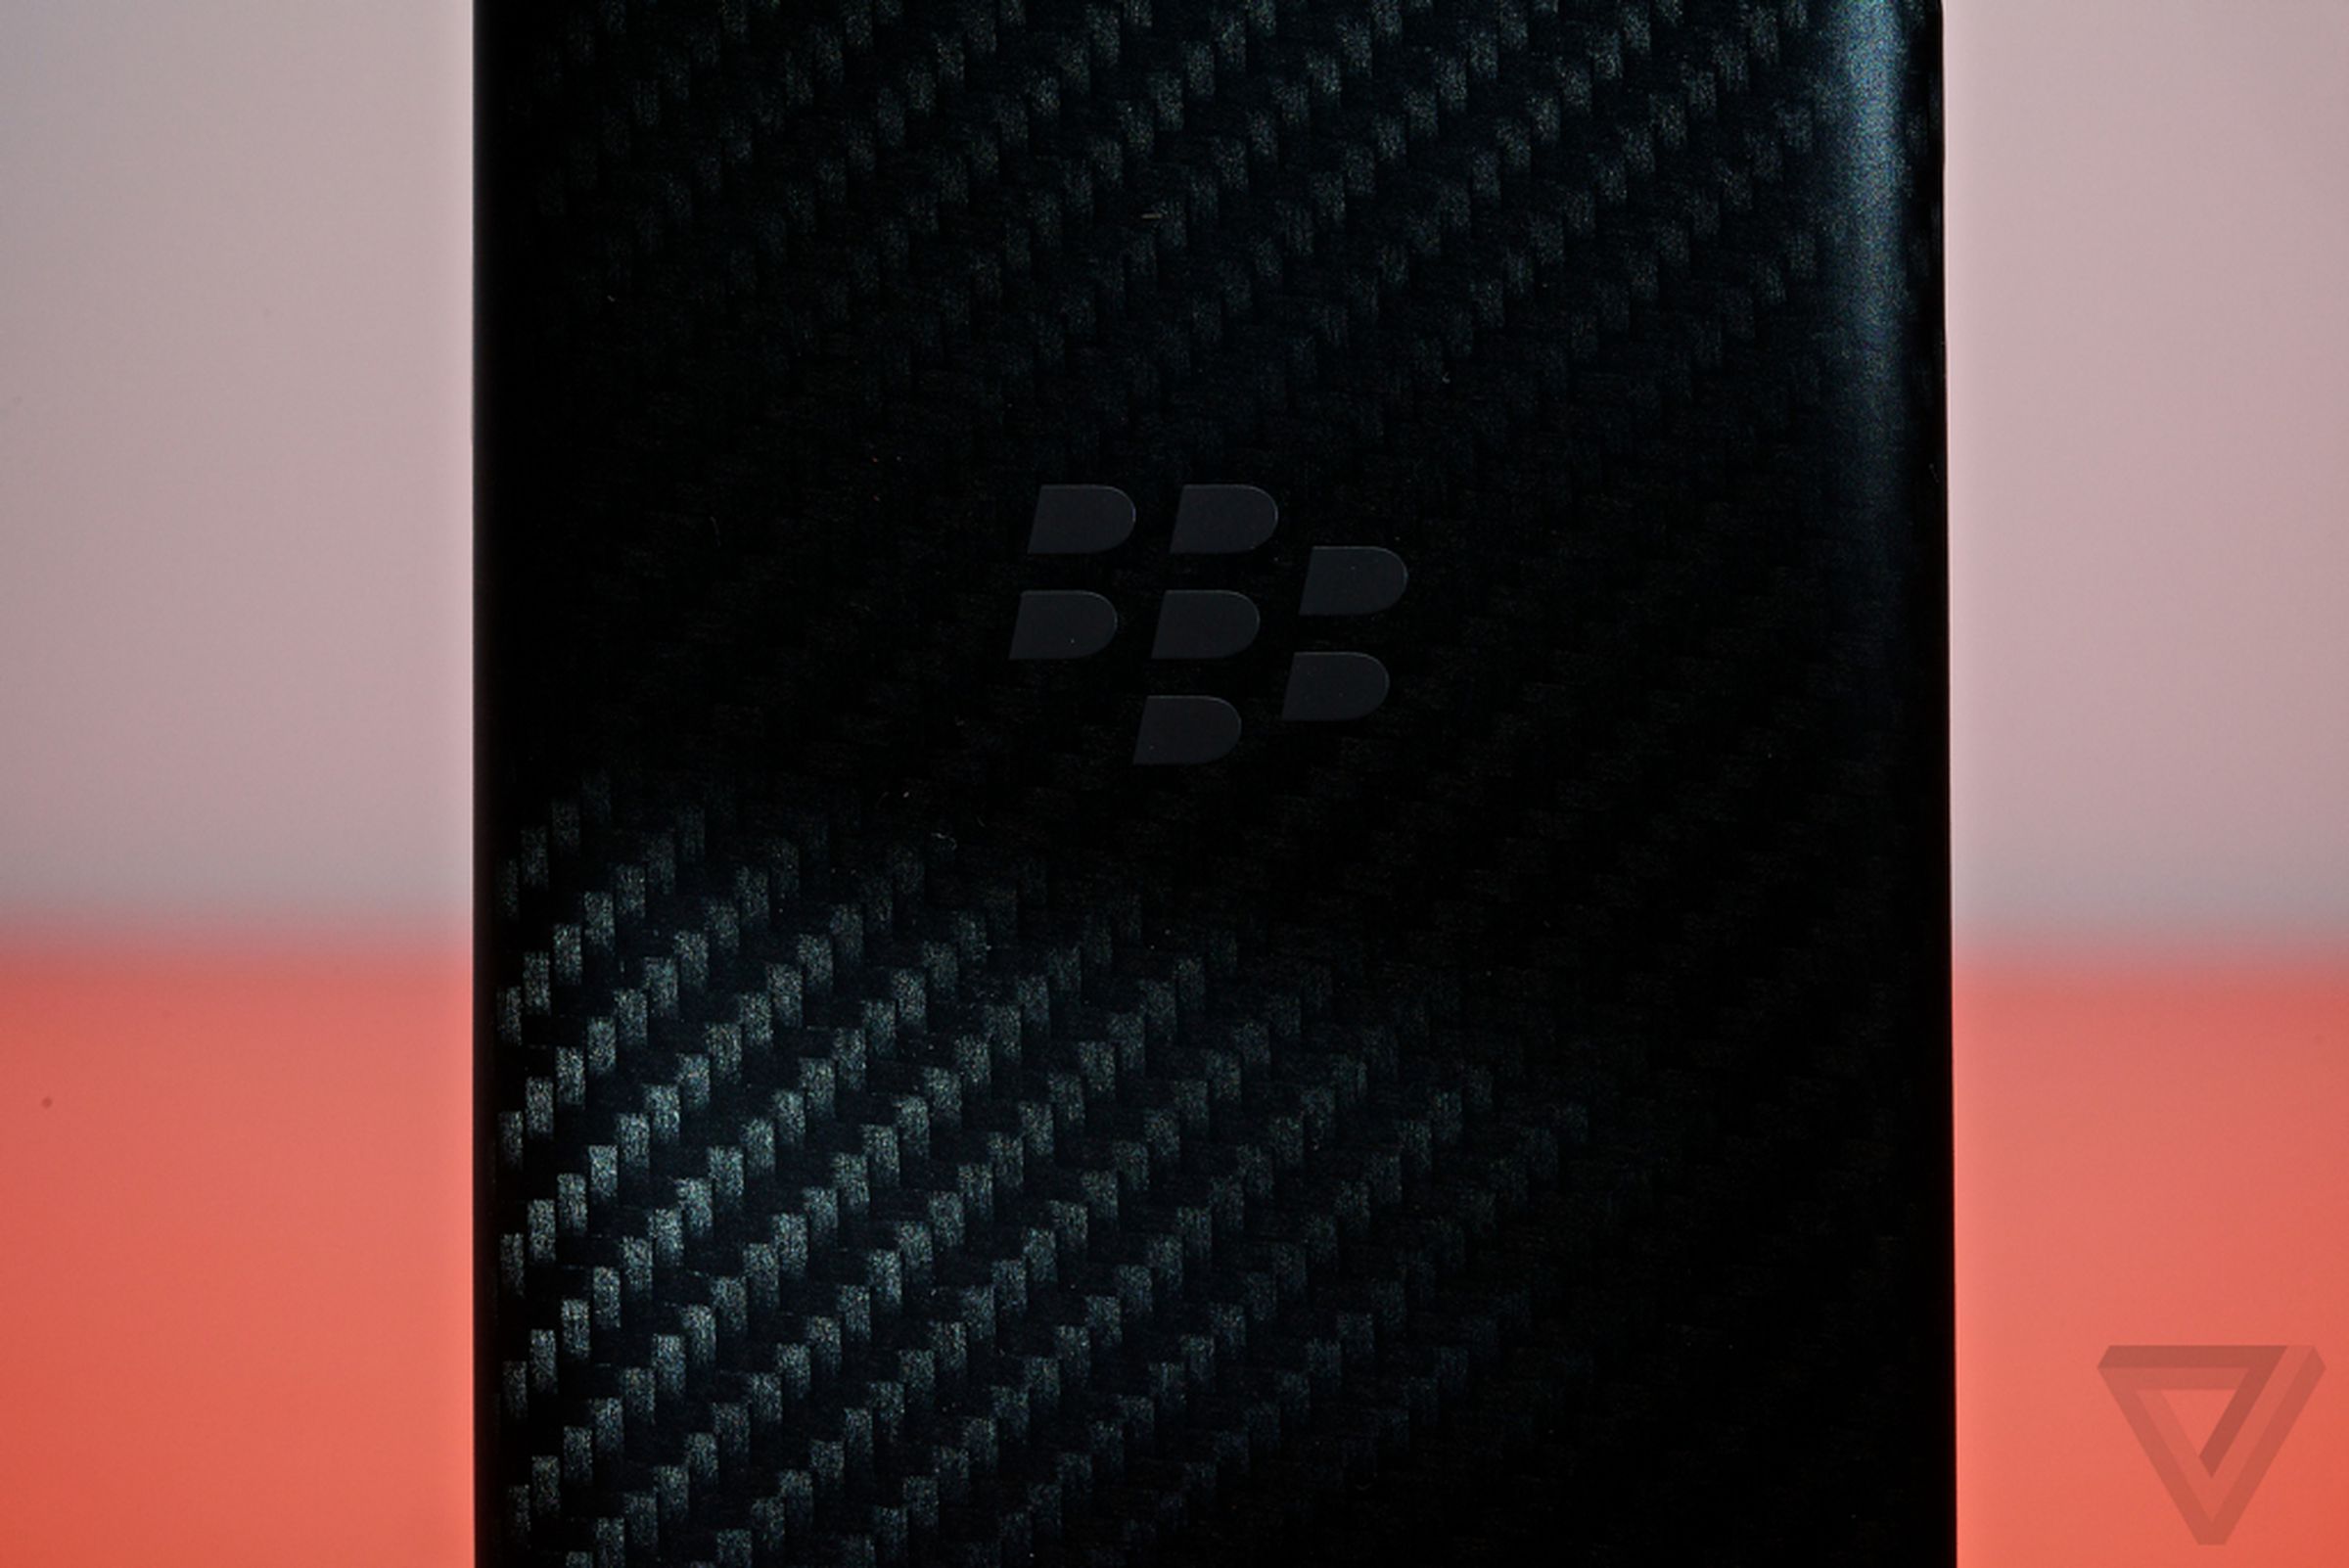 BlackBerry Q10 pictures